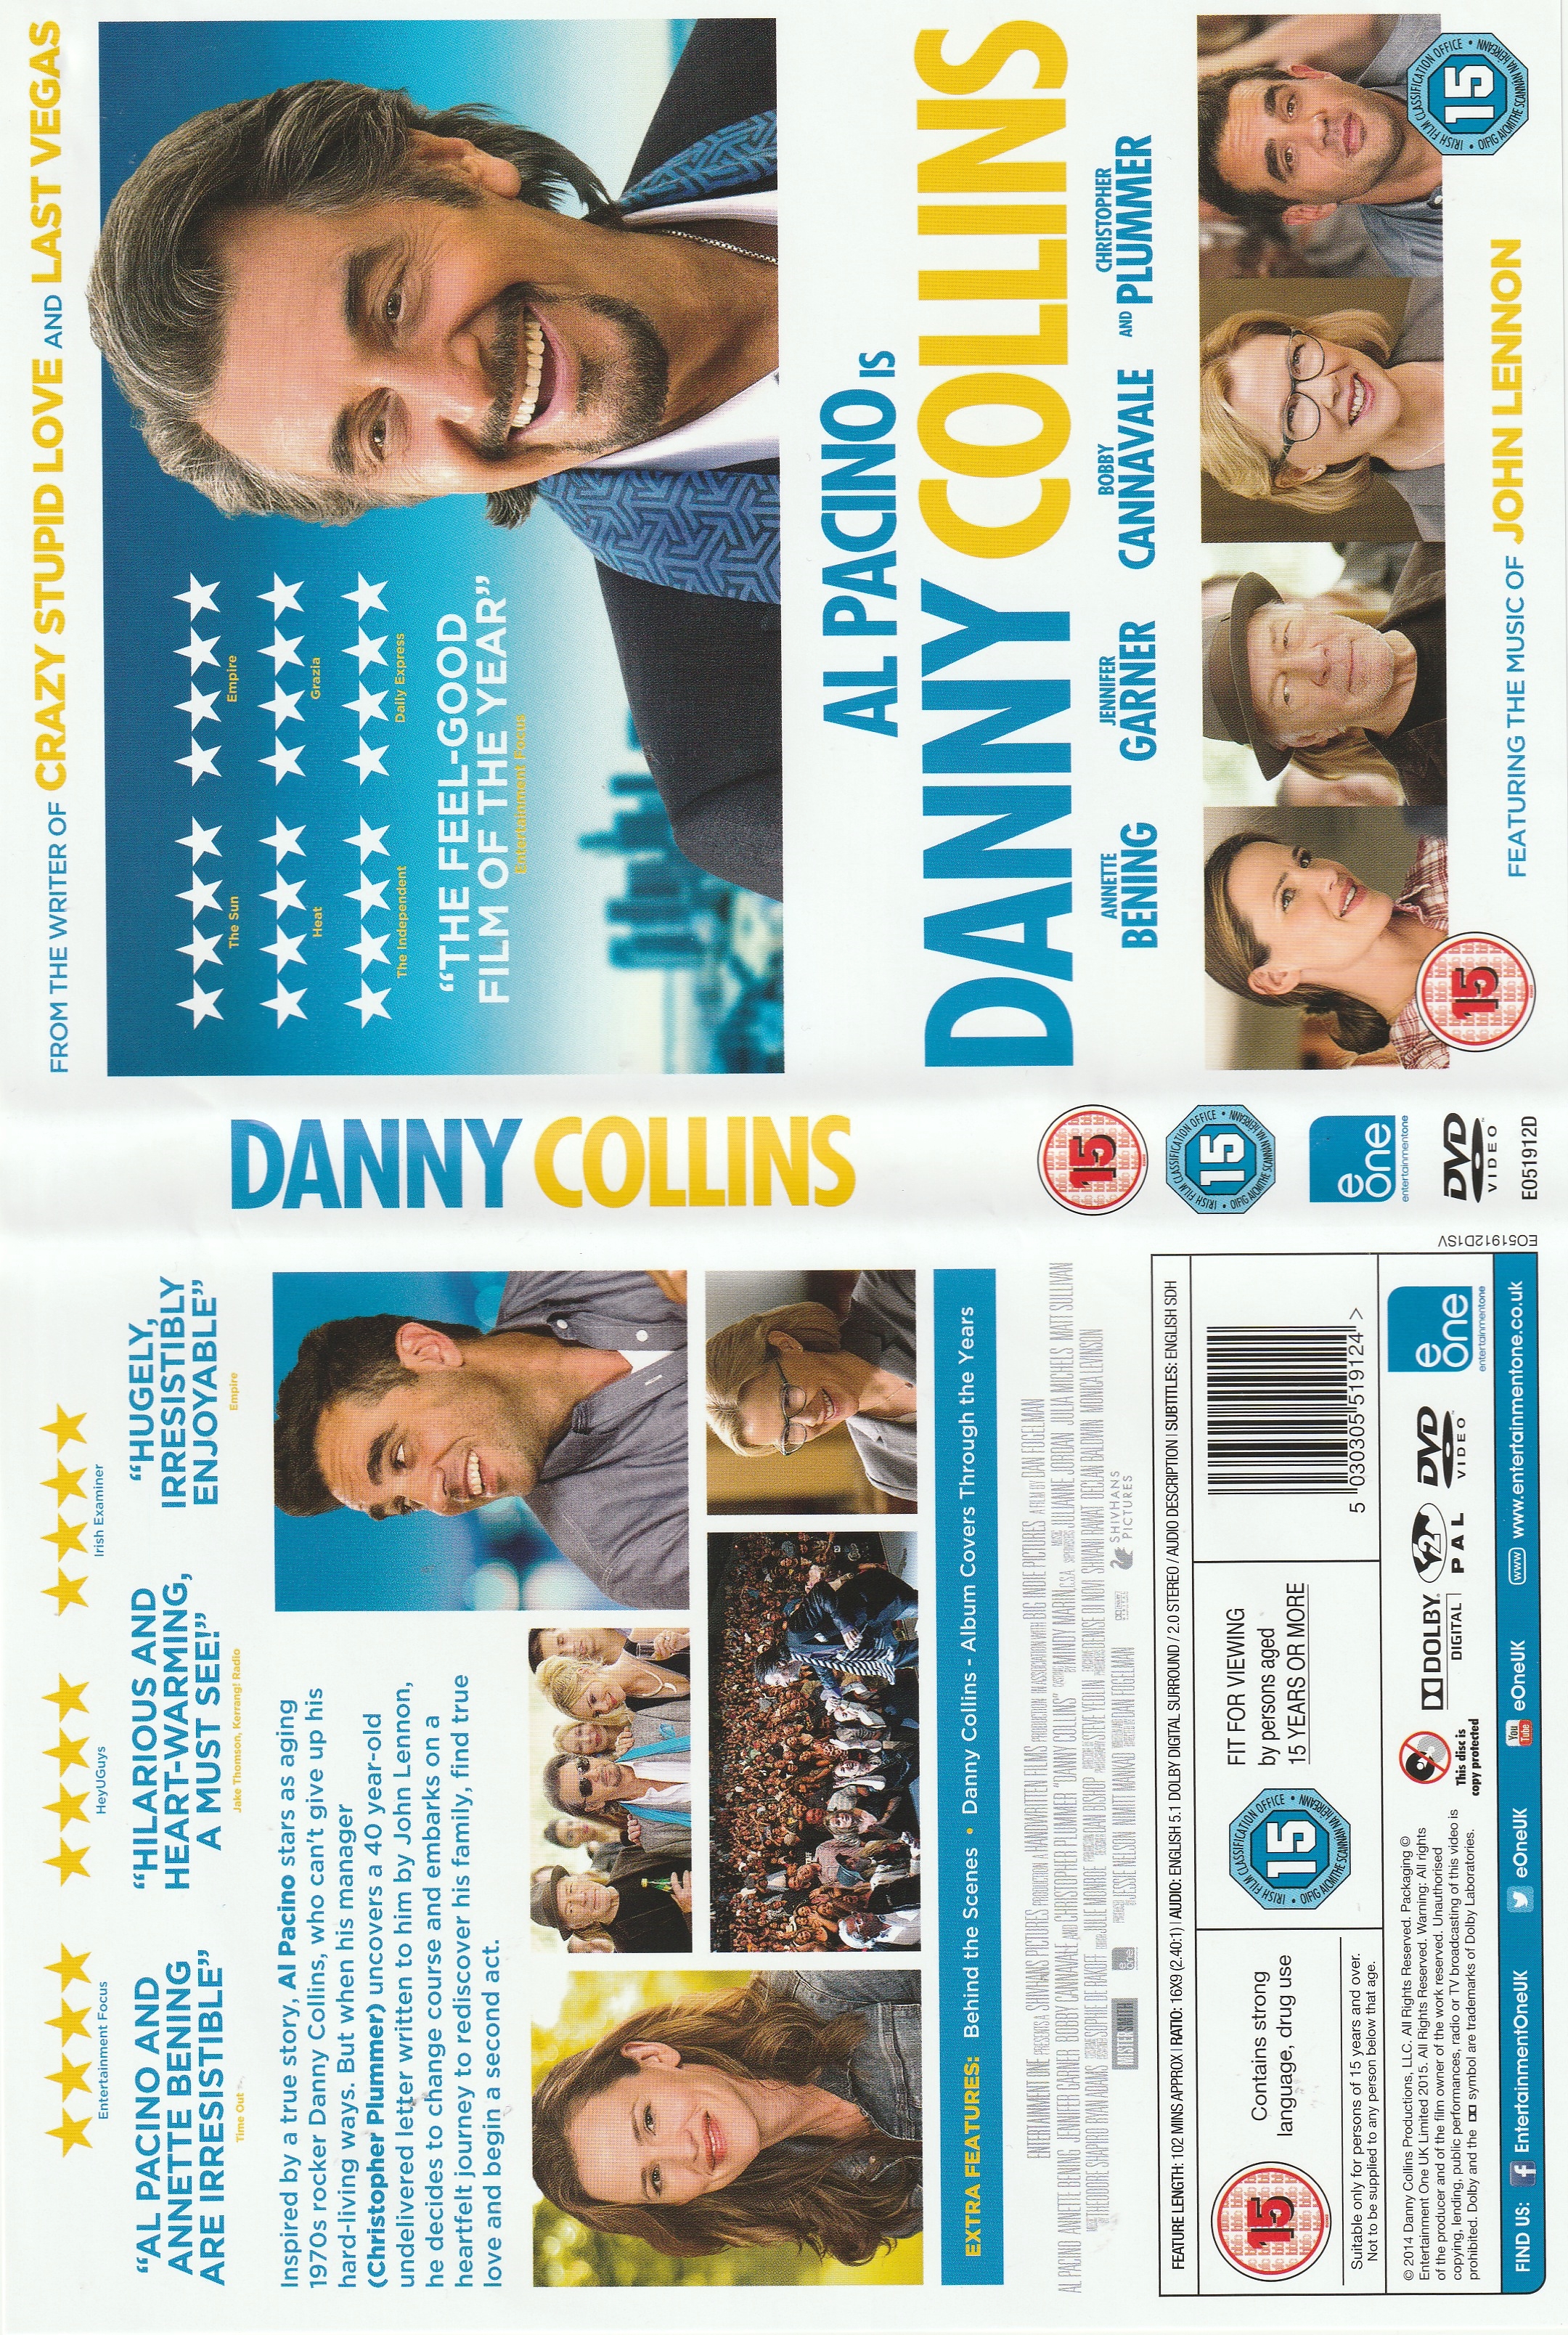 Jaquette DVD Danny Collins ZONE 1